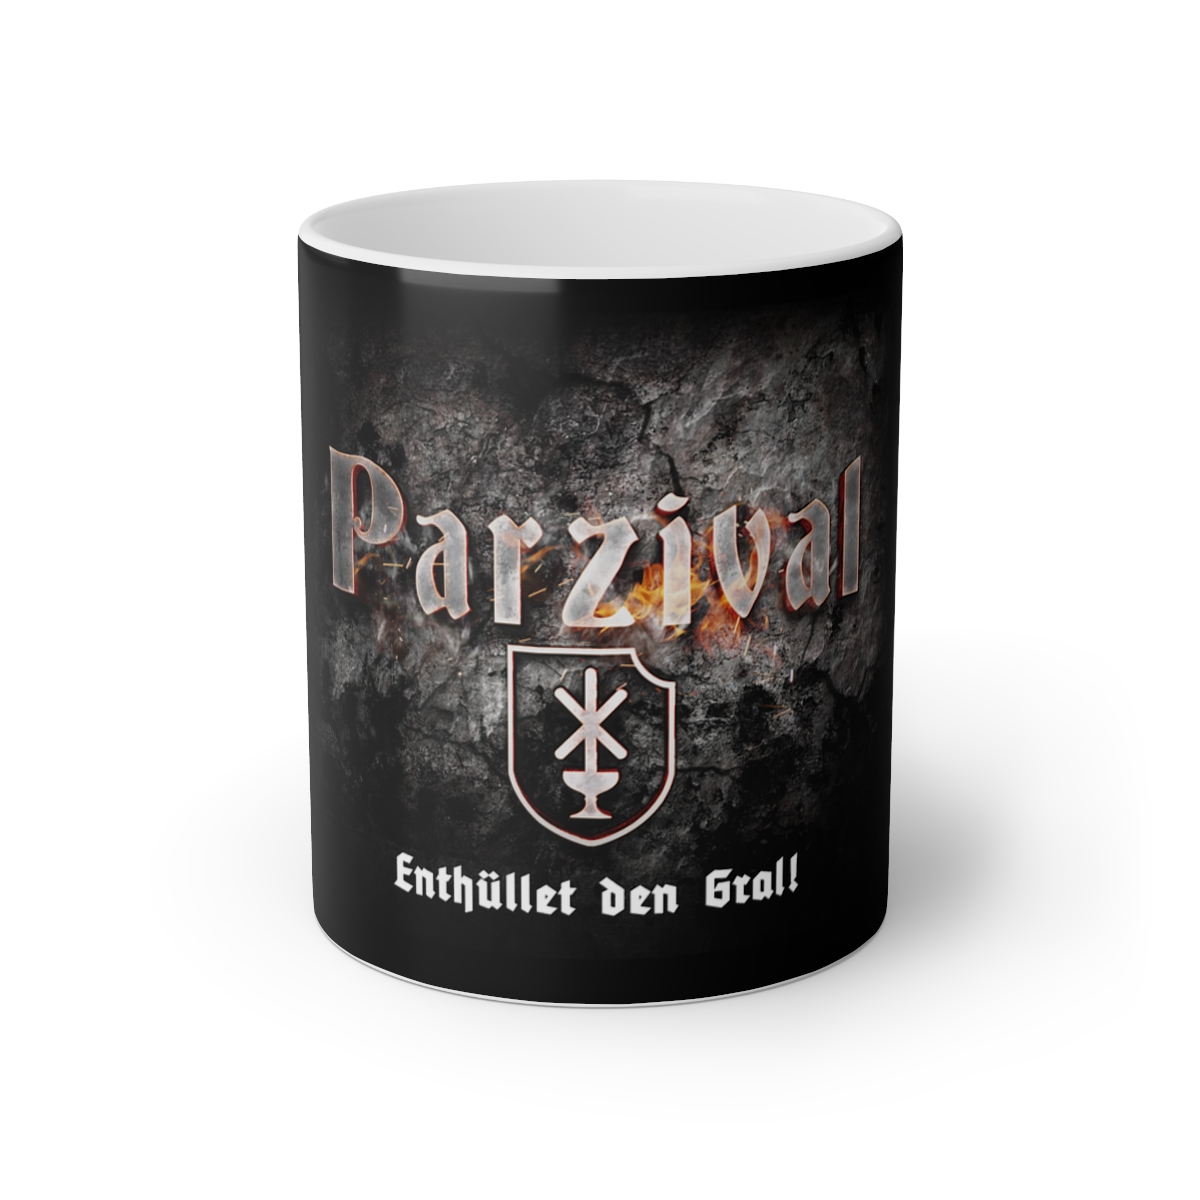 Parzival Mug with Maier Files emblem and the words "Enthuellet den Gral!" (Unveil the Grail!)